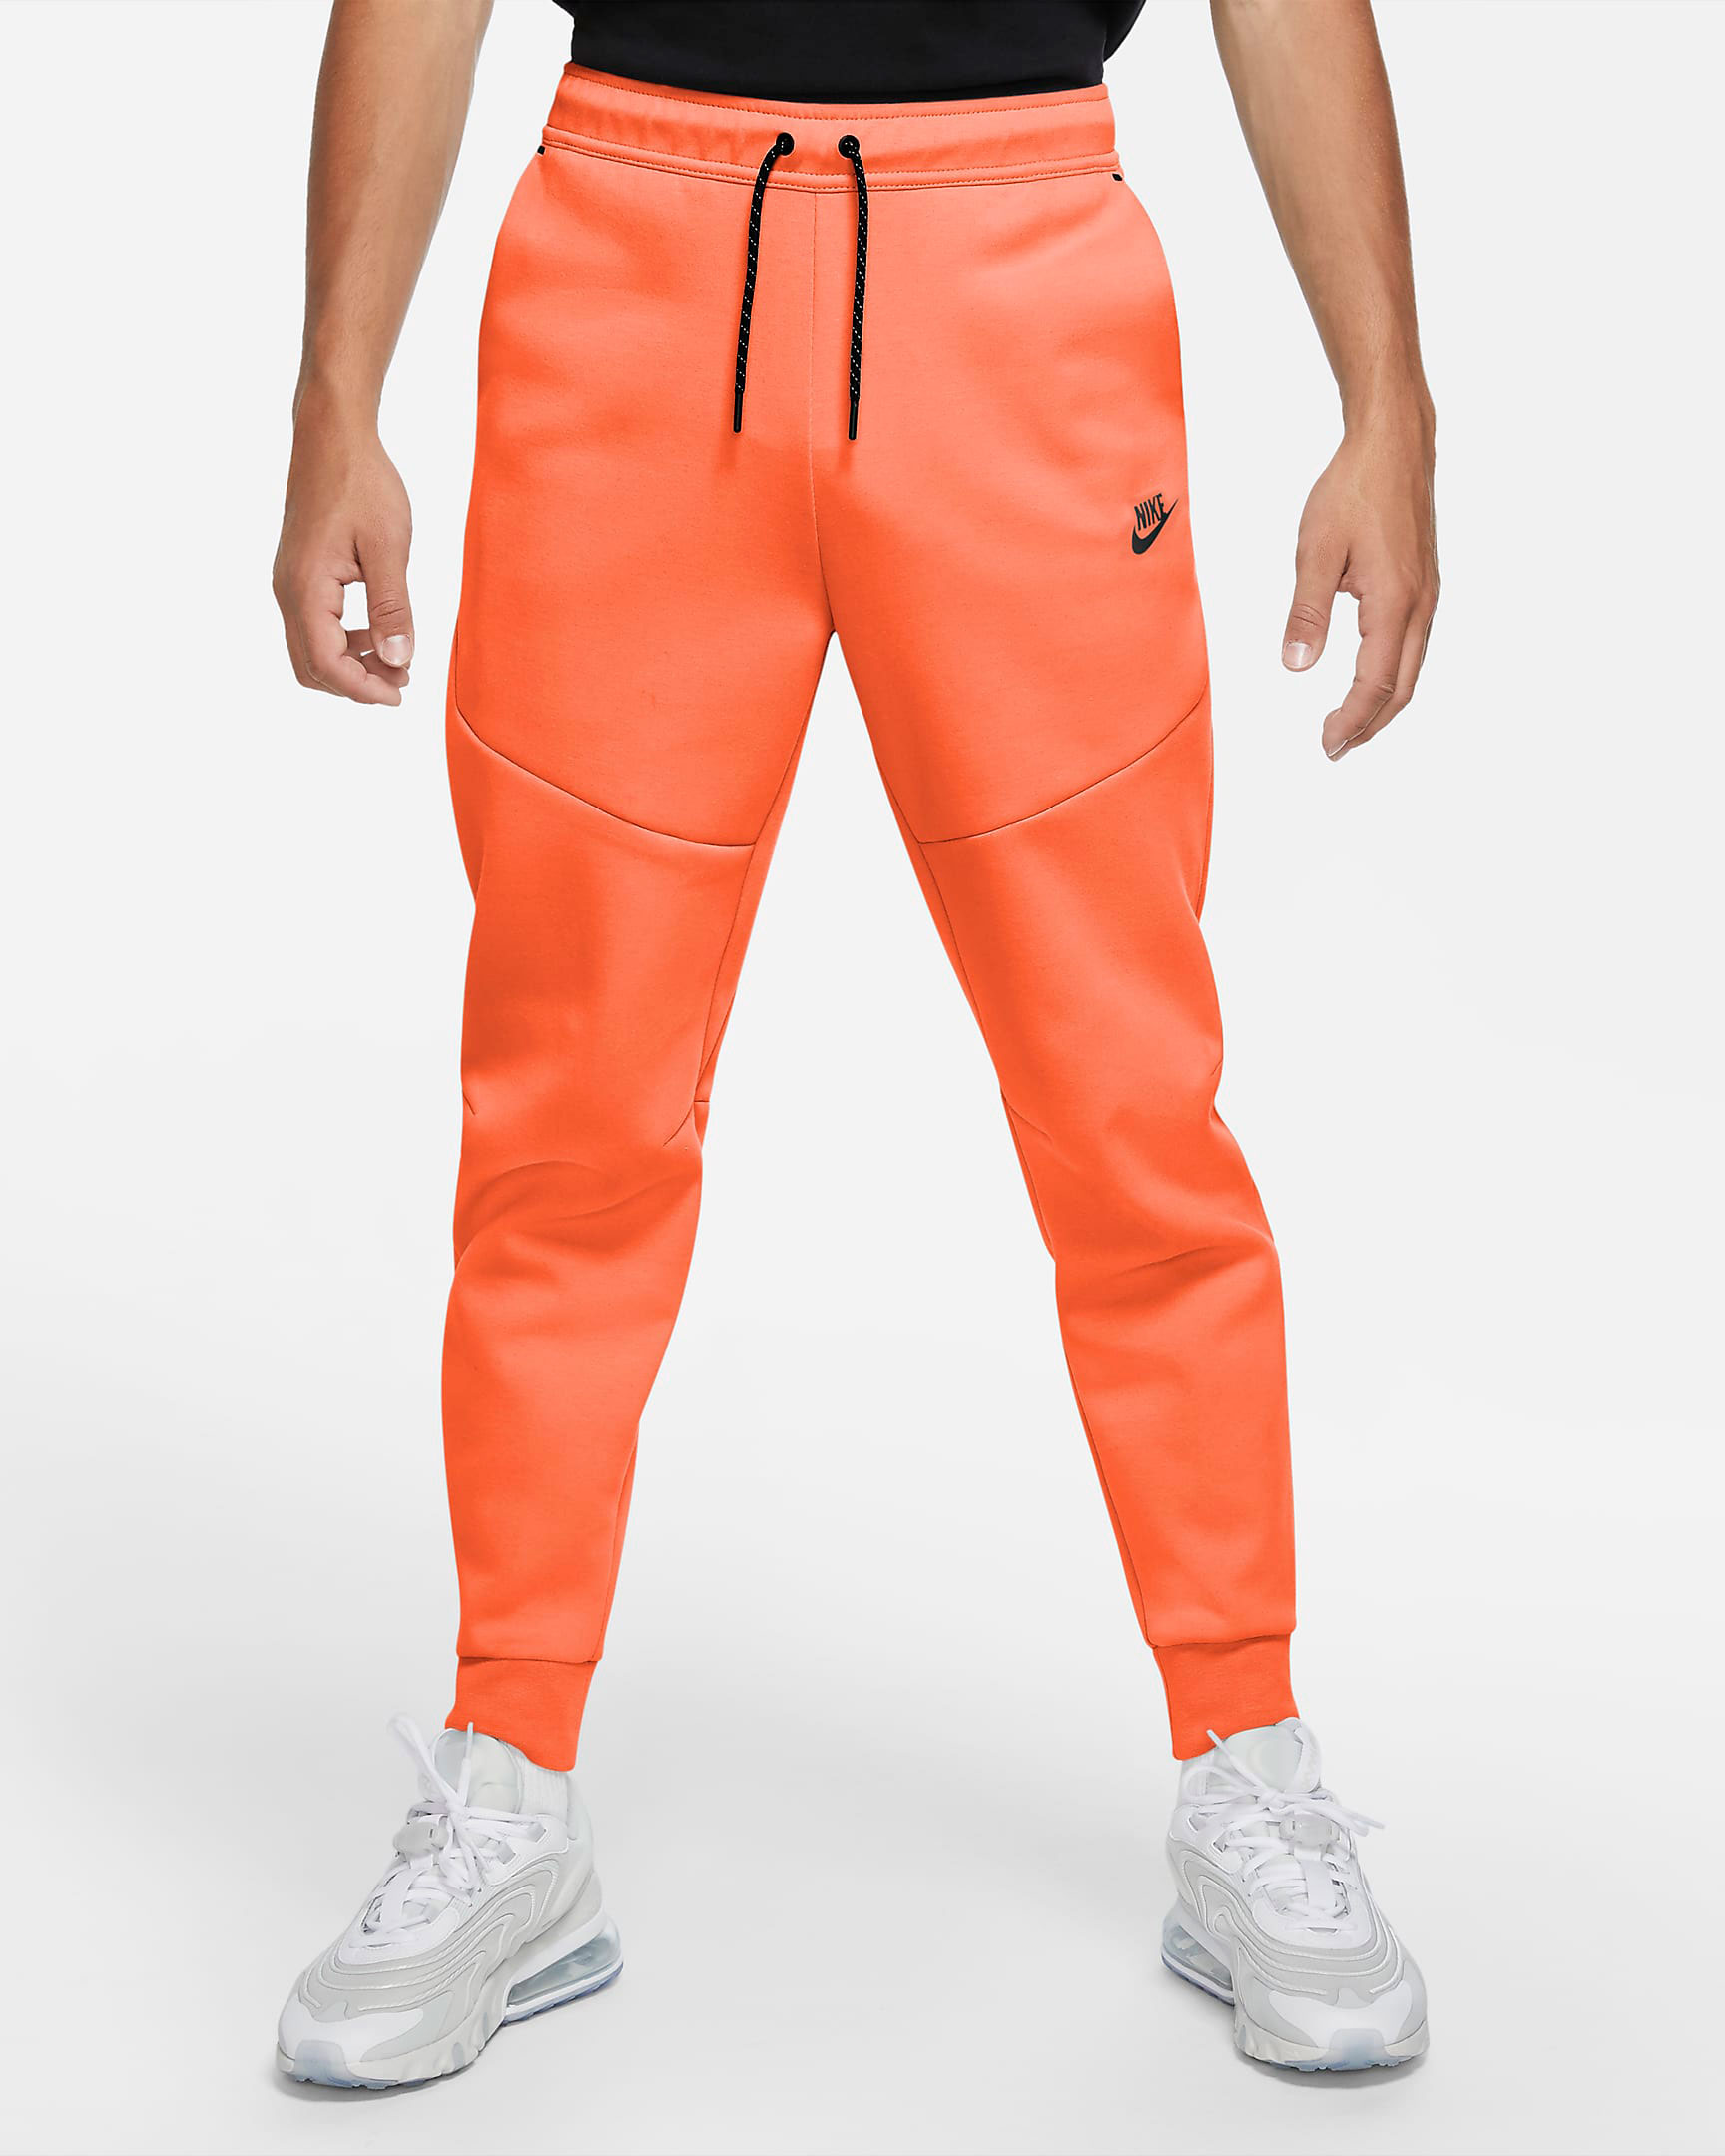 Nike Tech Fleece Jogger Pants for Fall 2020